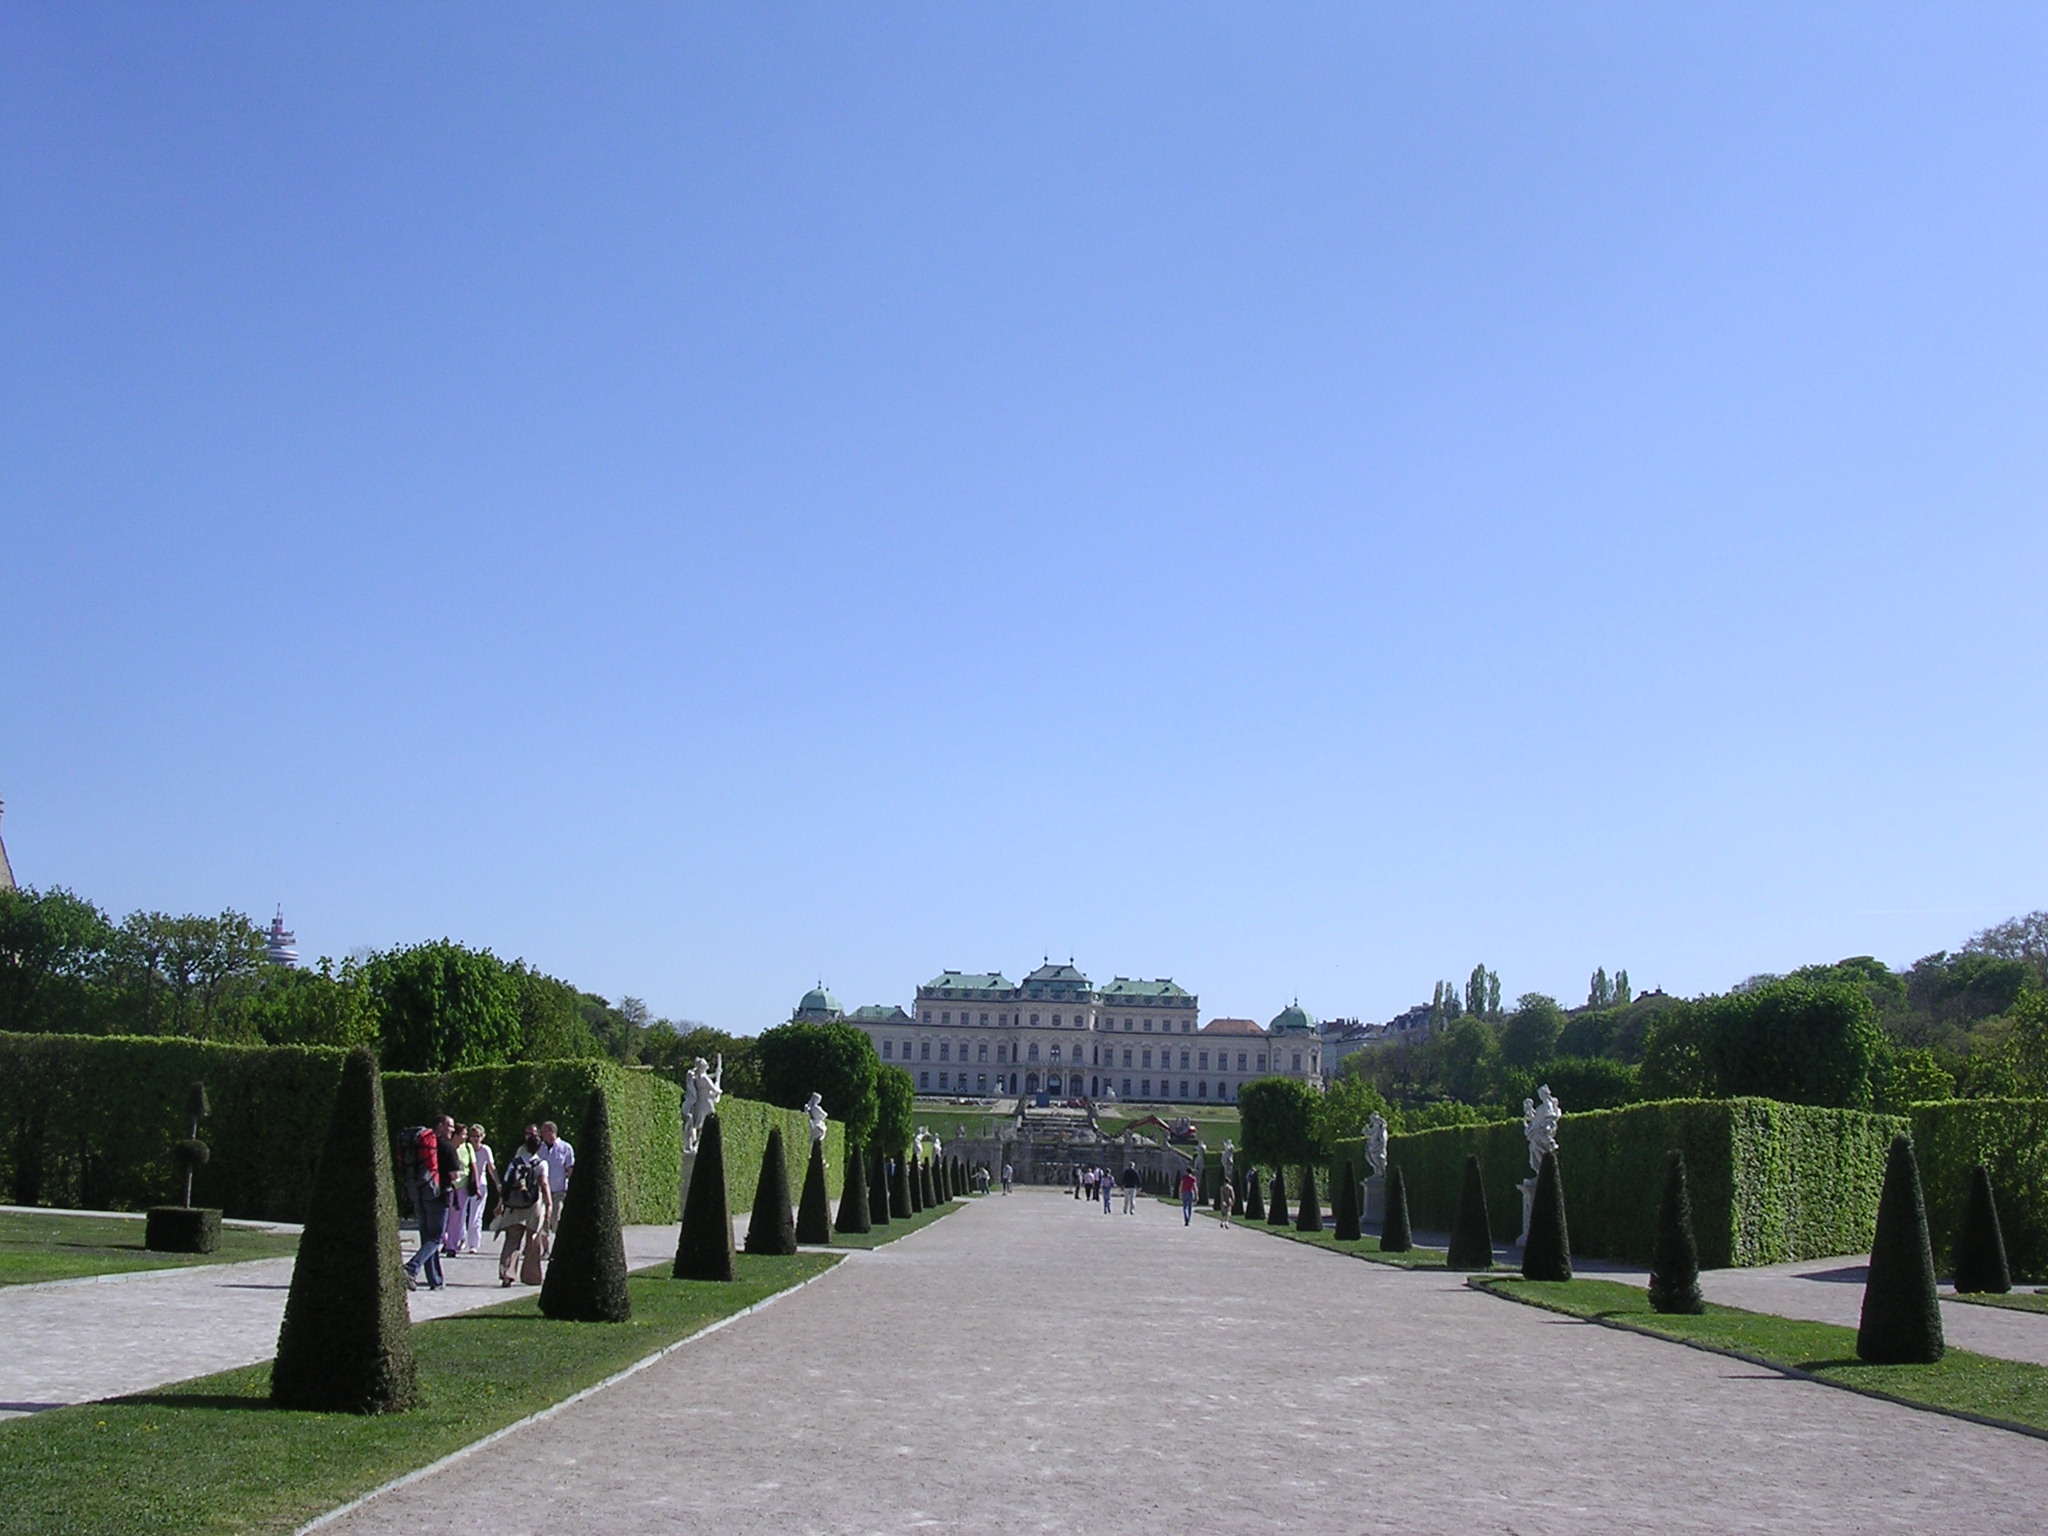 photo of belvedere castle in vienna